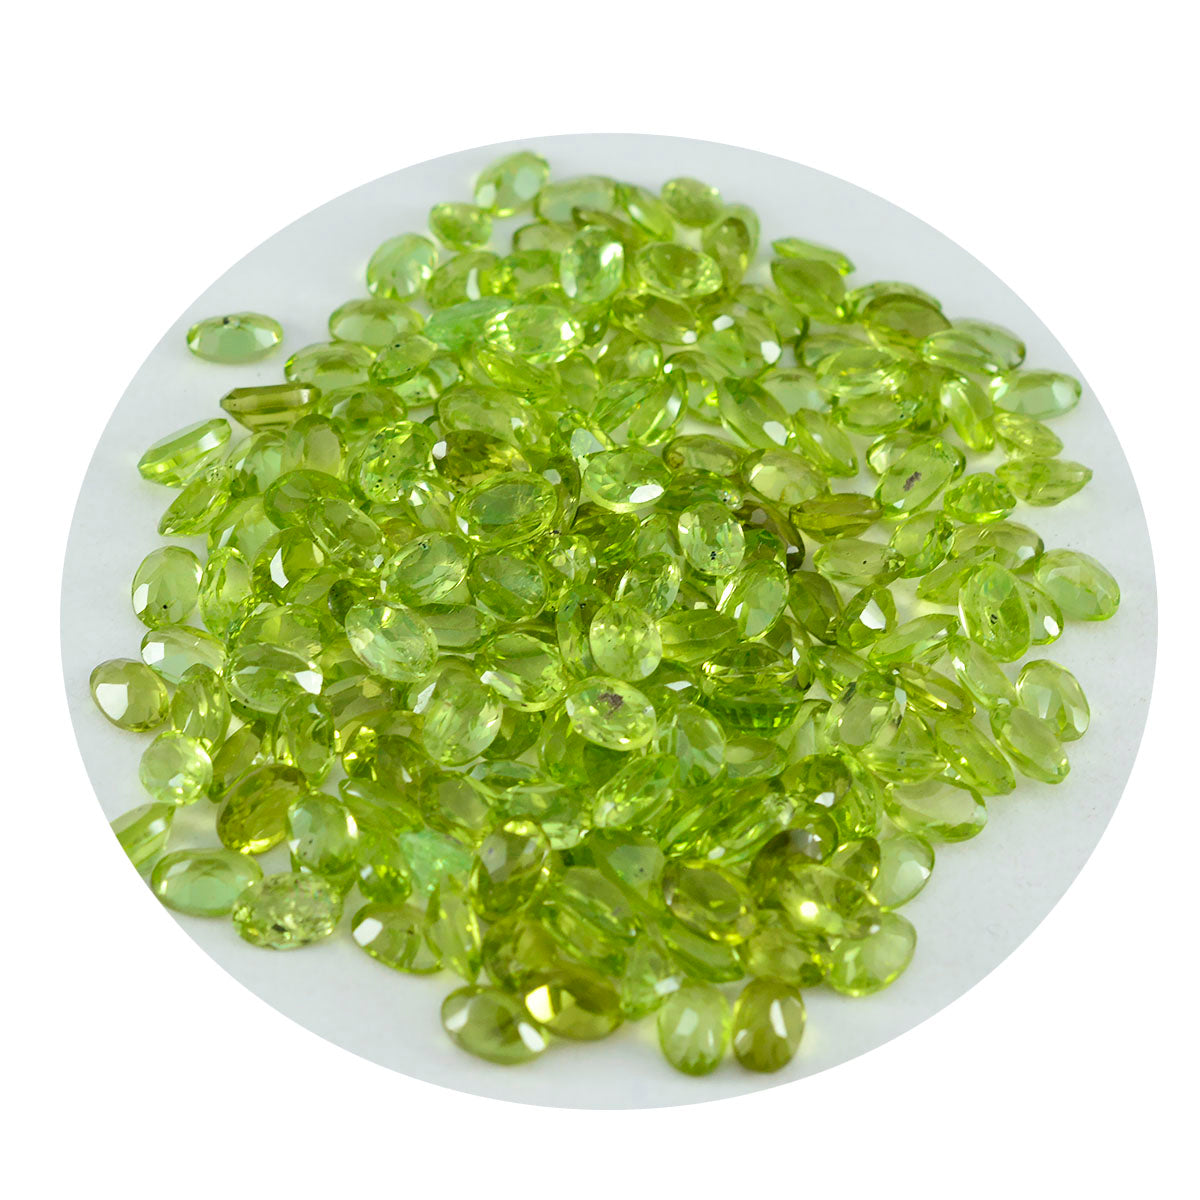 Riyogems 1PC natuurlijke groene peridot gefacetteerd 3x5 mm ovale vorm mooie kwaliteit losse edelstenen